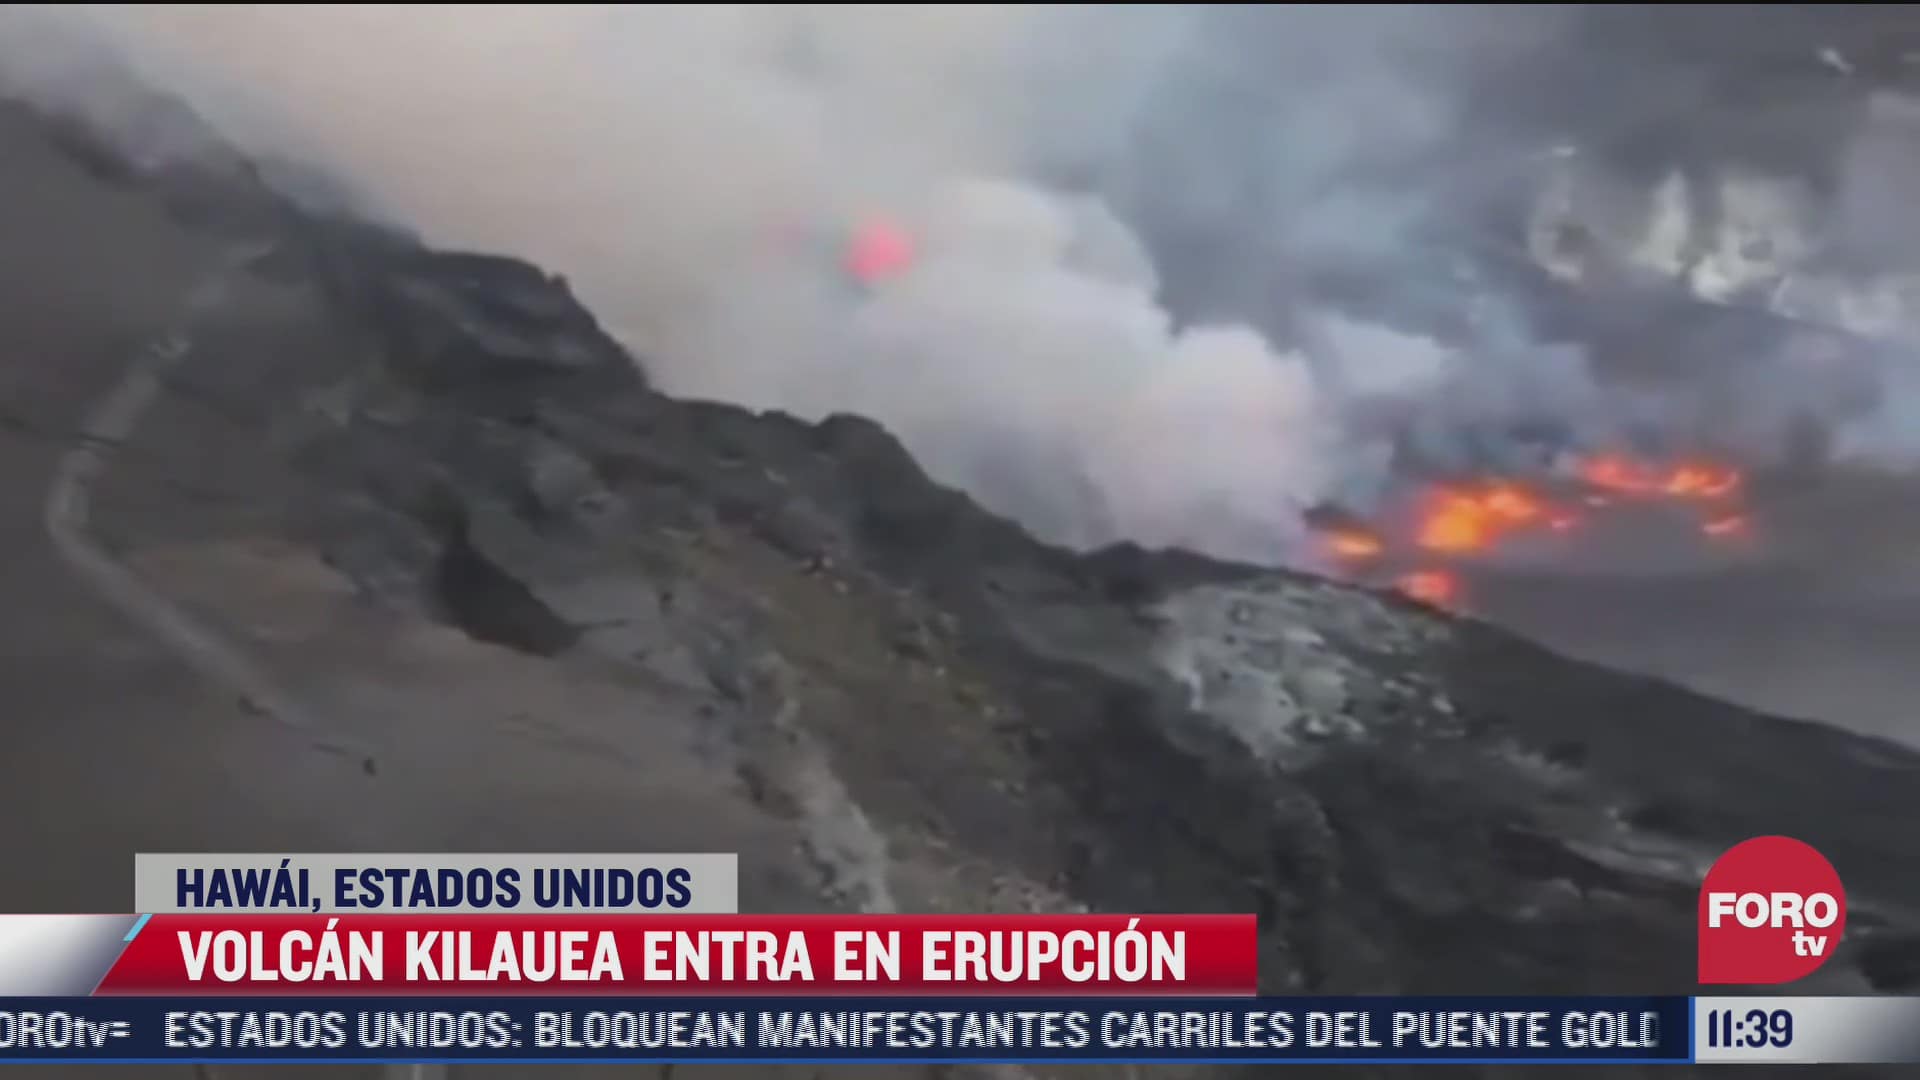 volcan kilauea entra en erupcion despues de varios meses